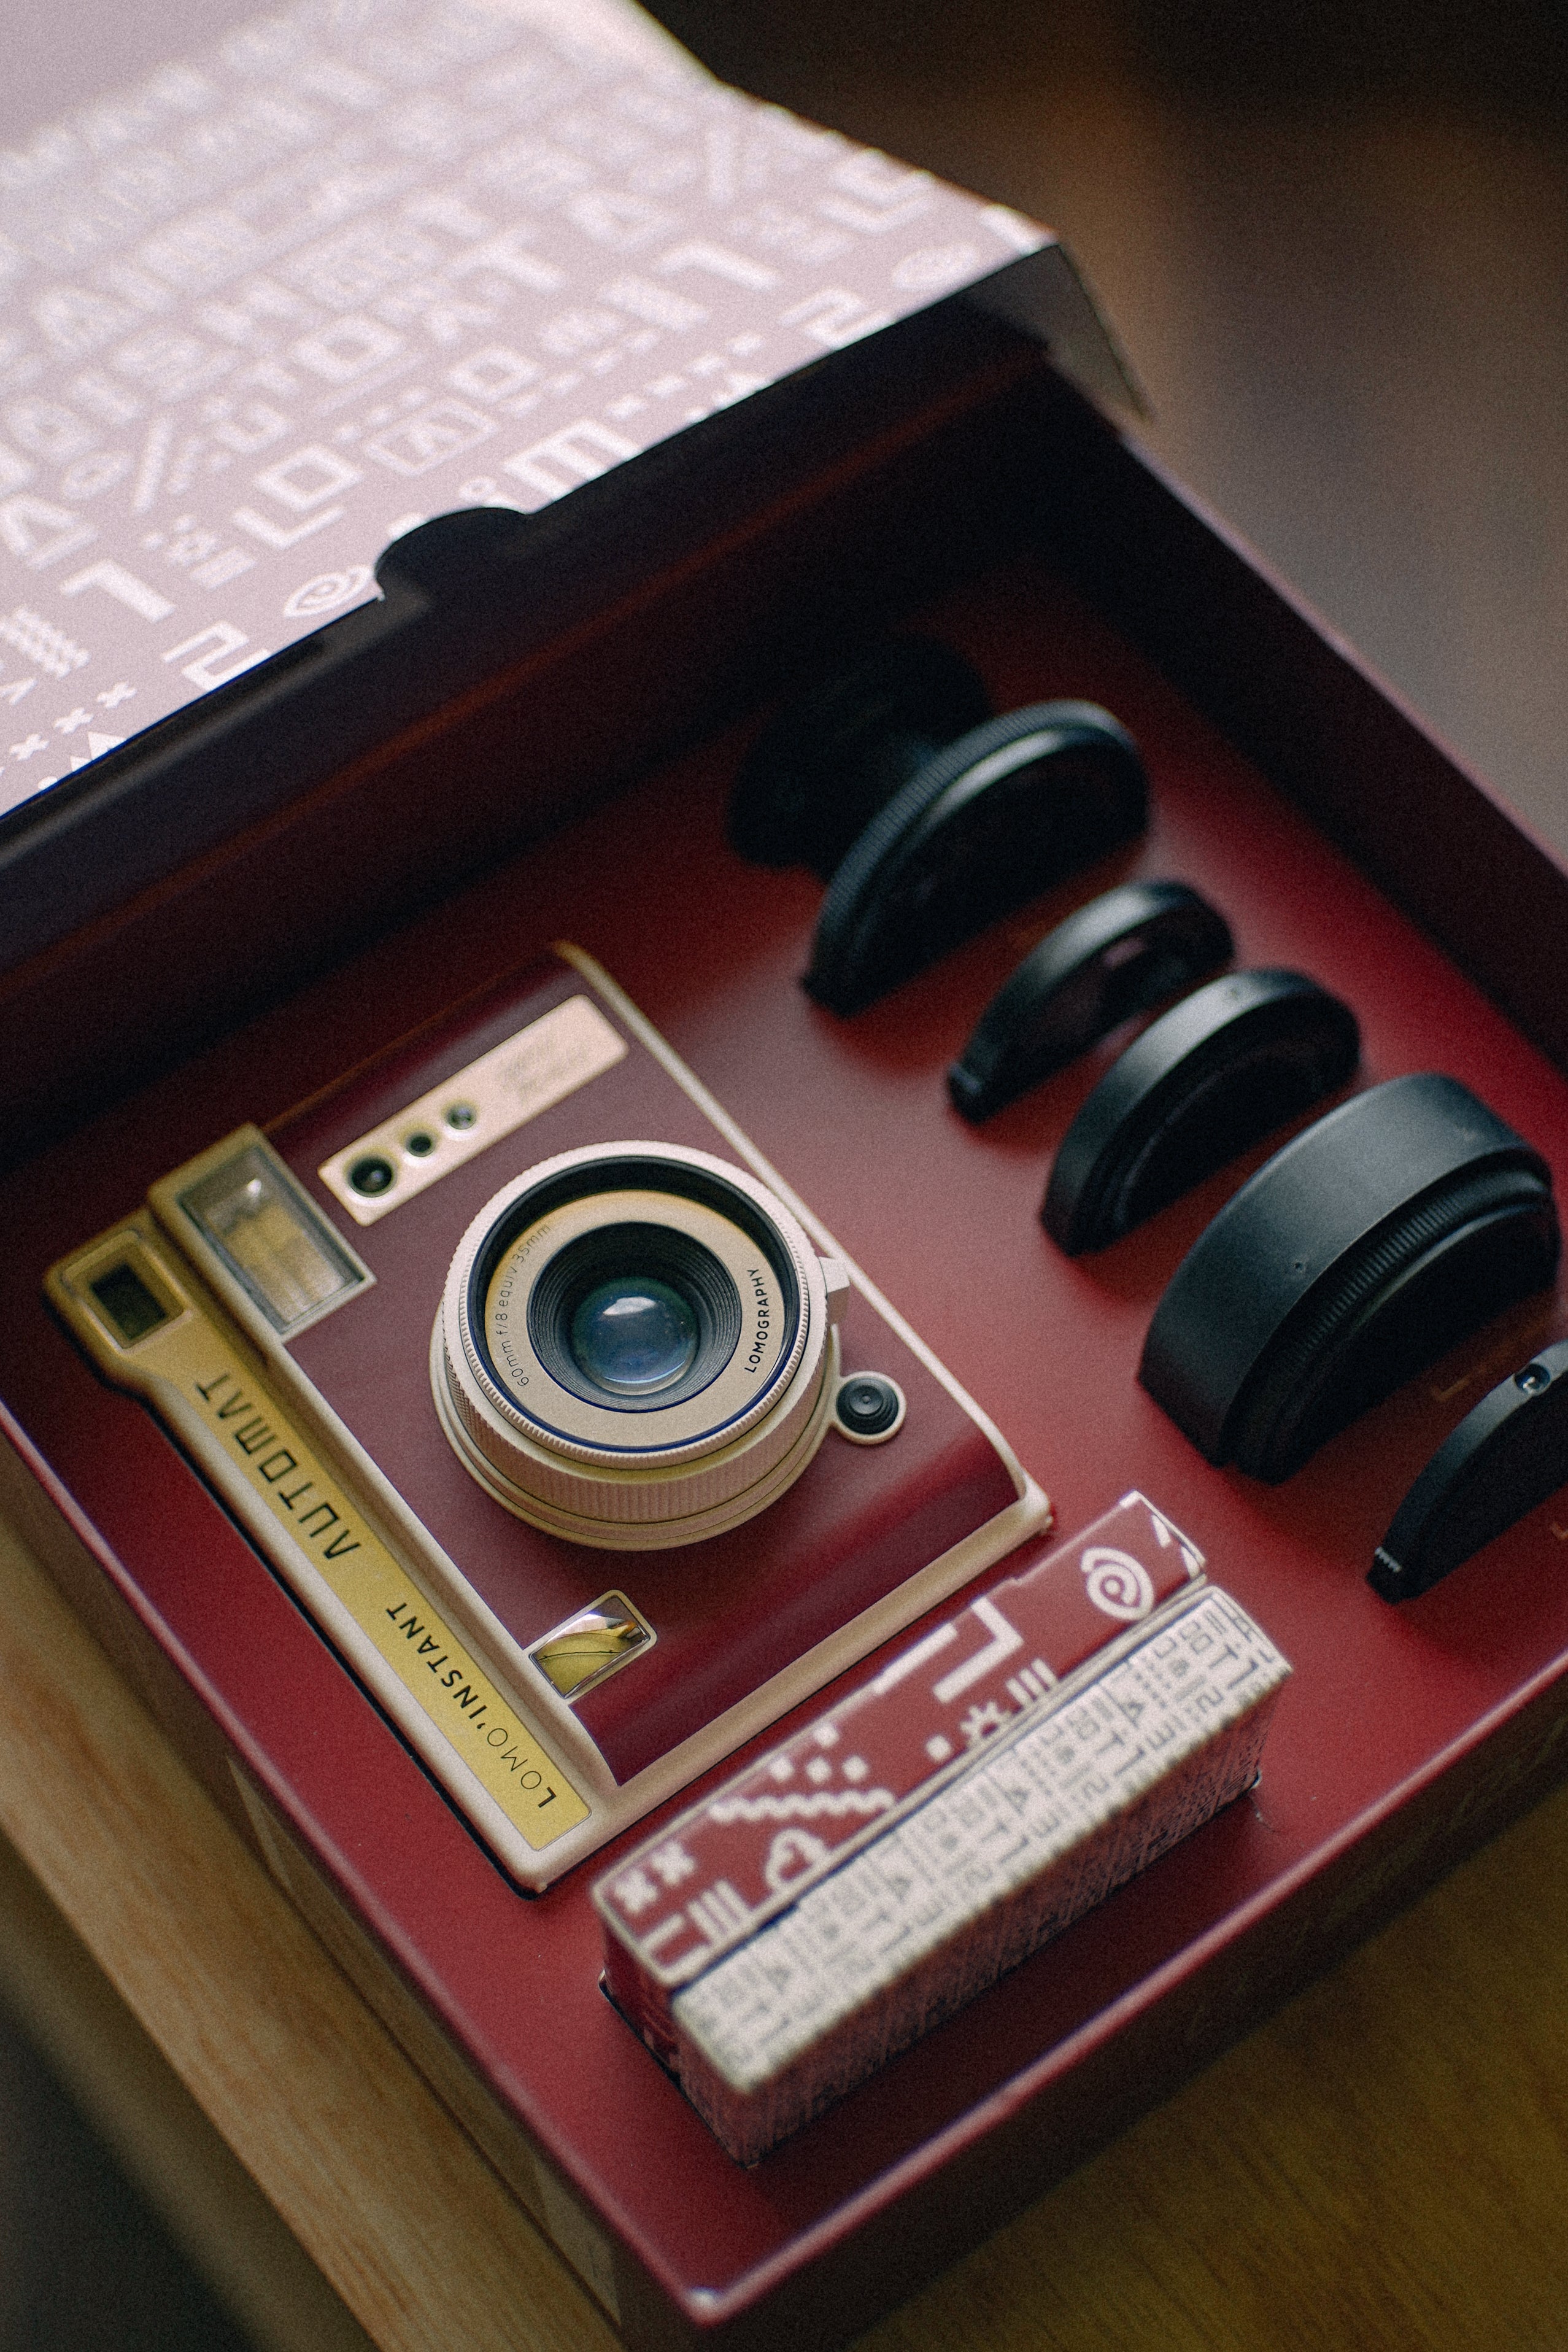 Lomo Instant Automat - Camera & Lenses Set (South Beach Edition)